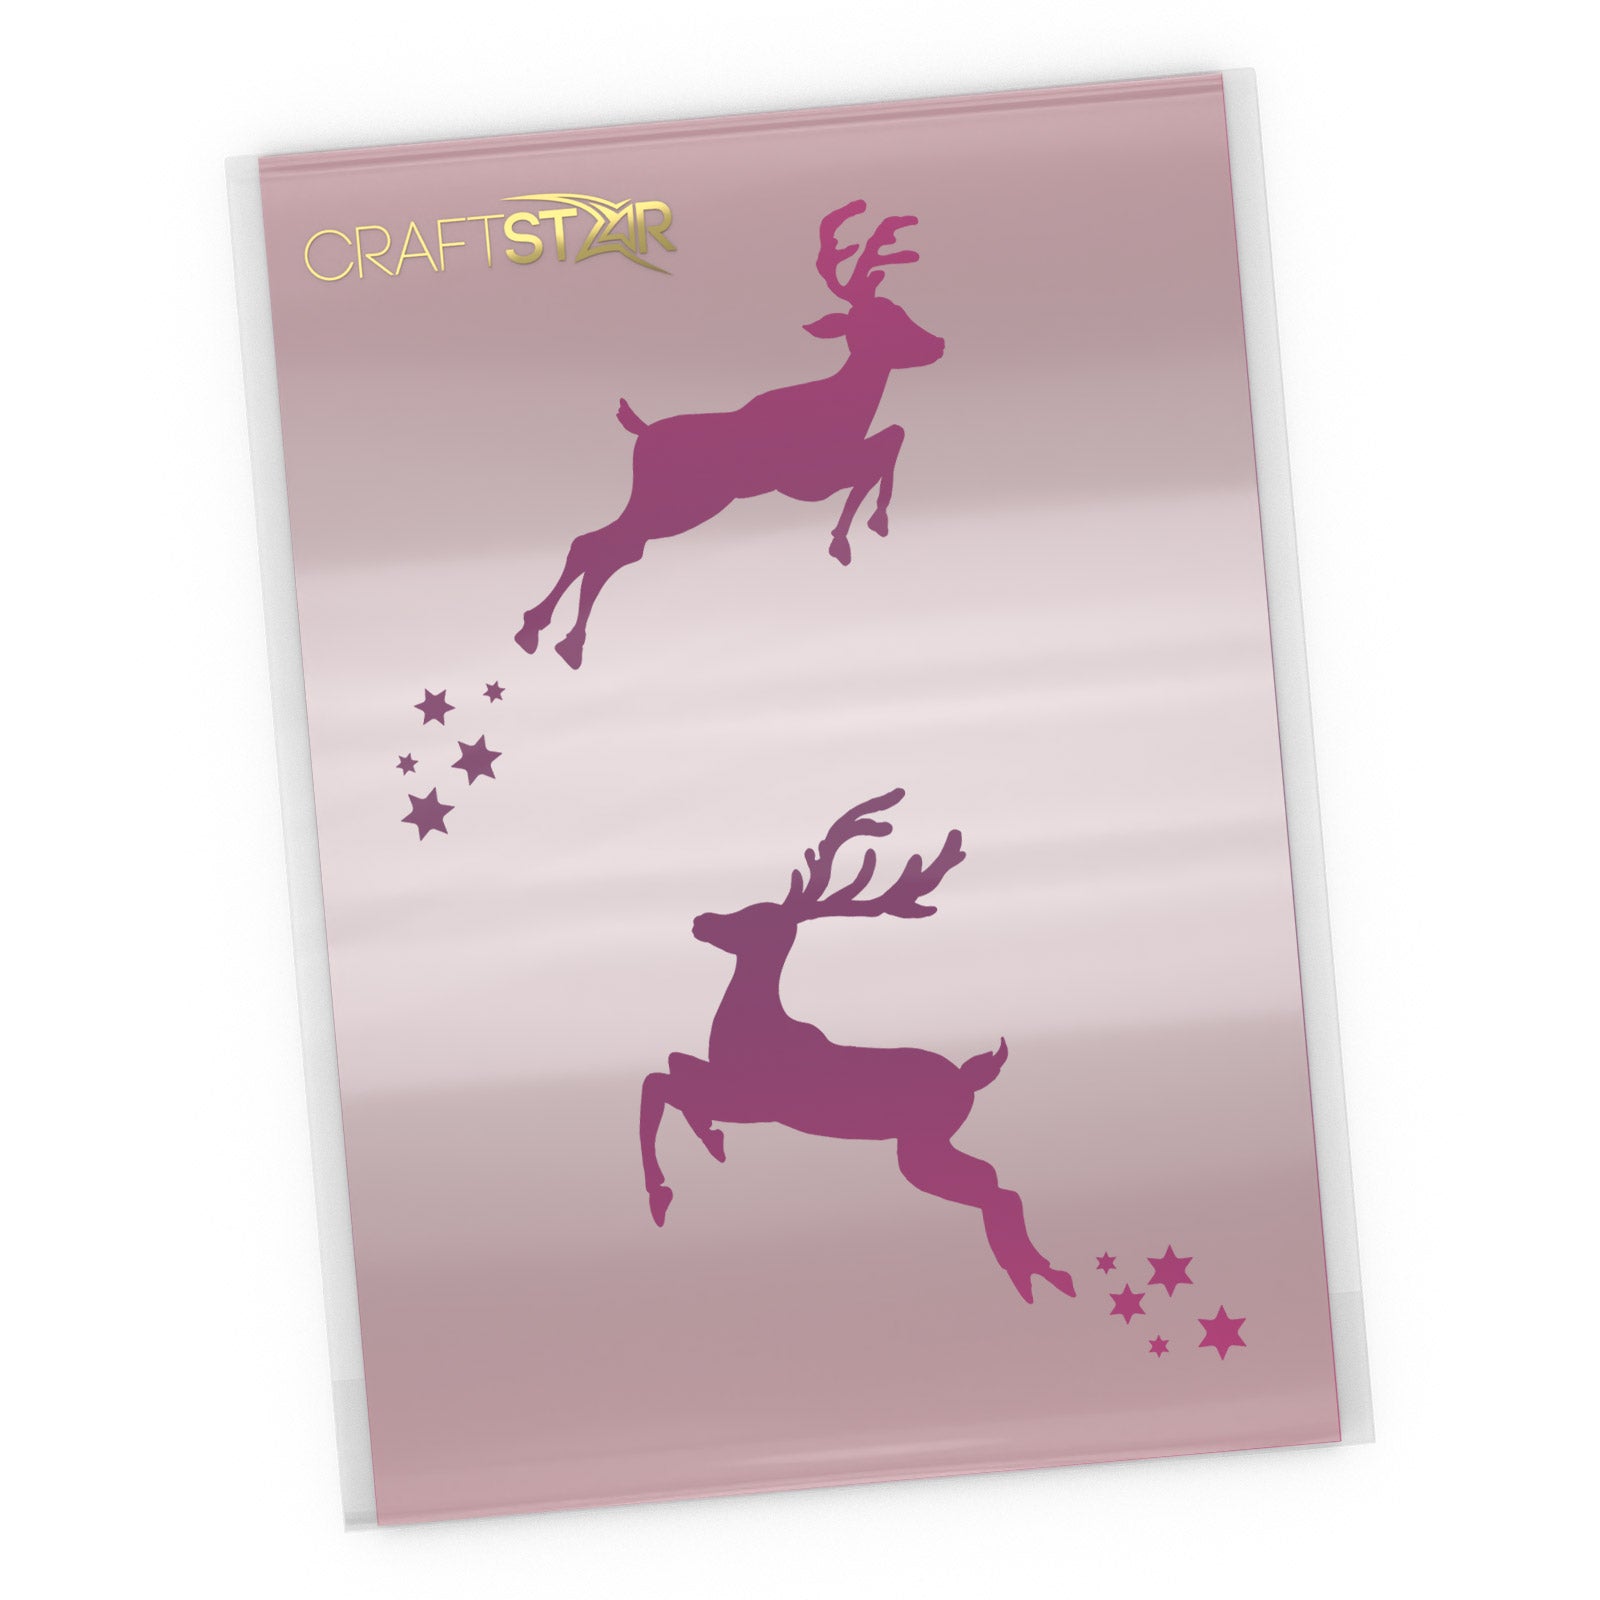 Small Reindeer Stencils - A5 Size Craft Template